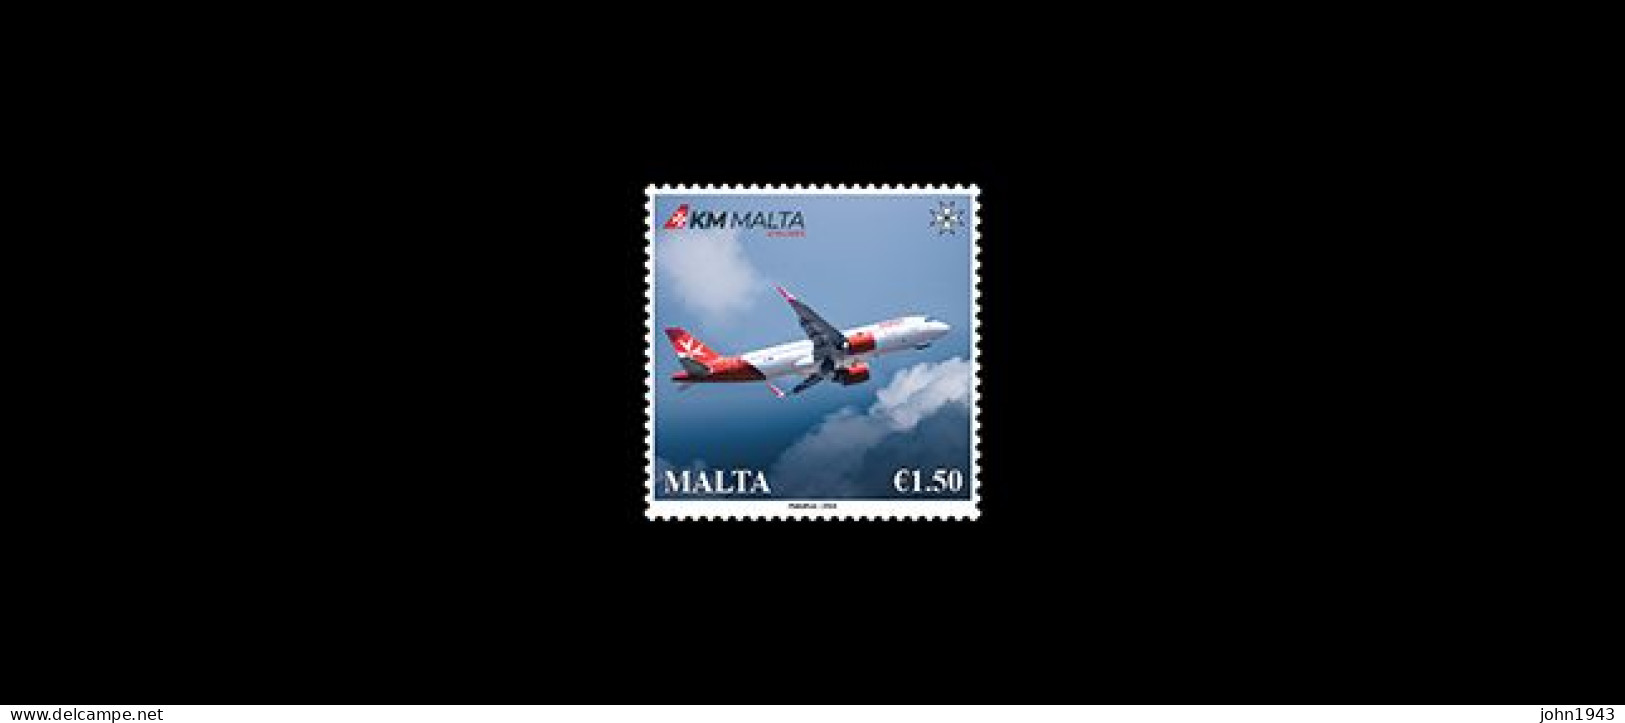 MALTA 2024 KM Malta Airlines SET OF THREE STAMPS MINT NH SUPER - Malte